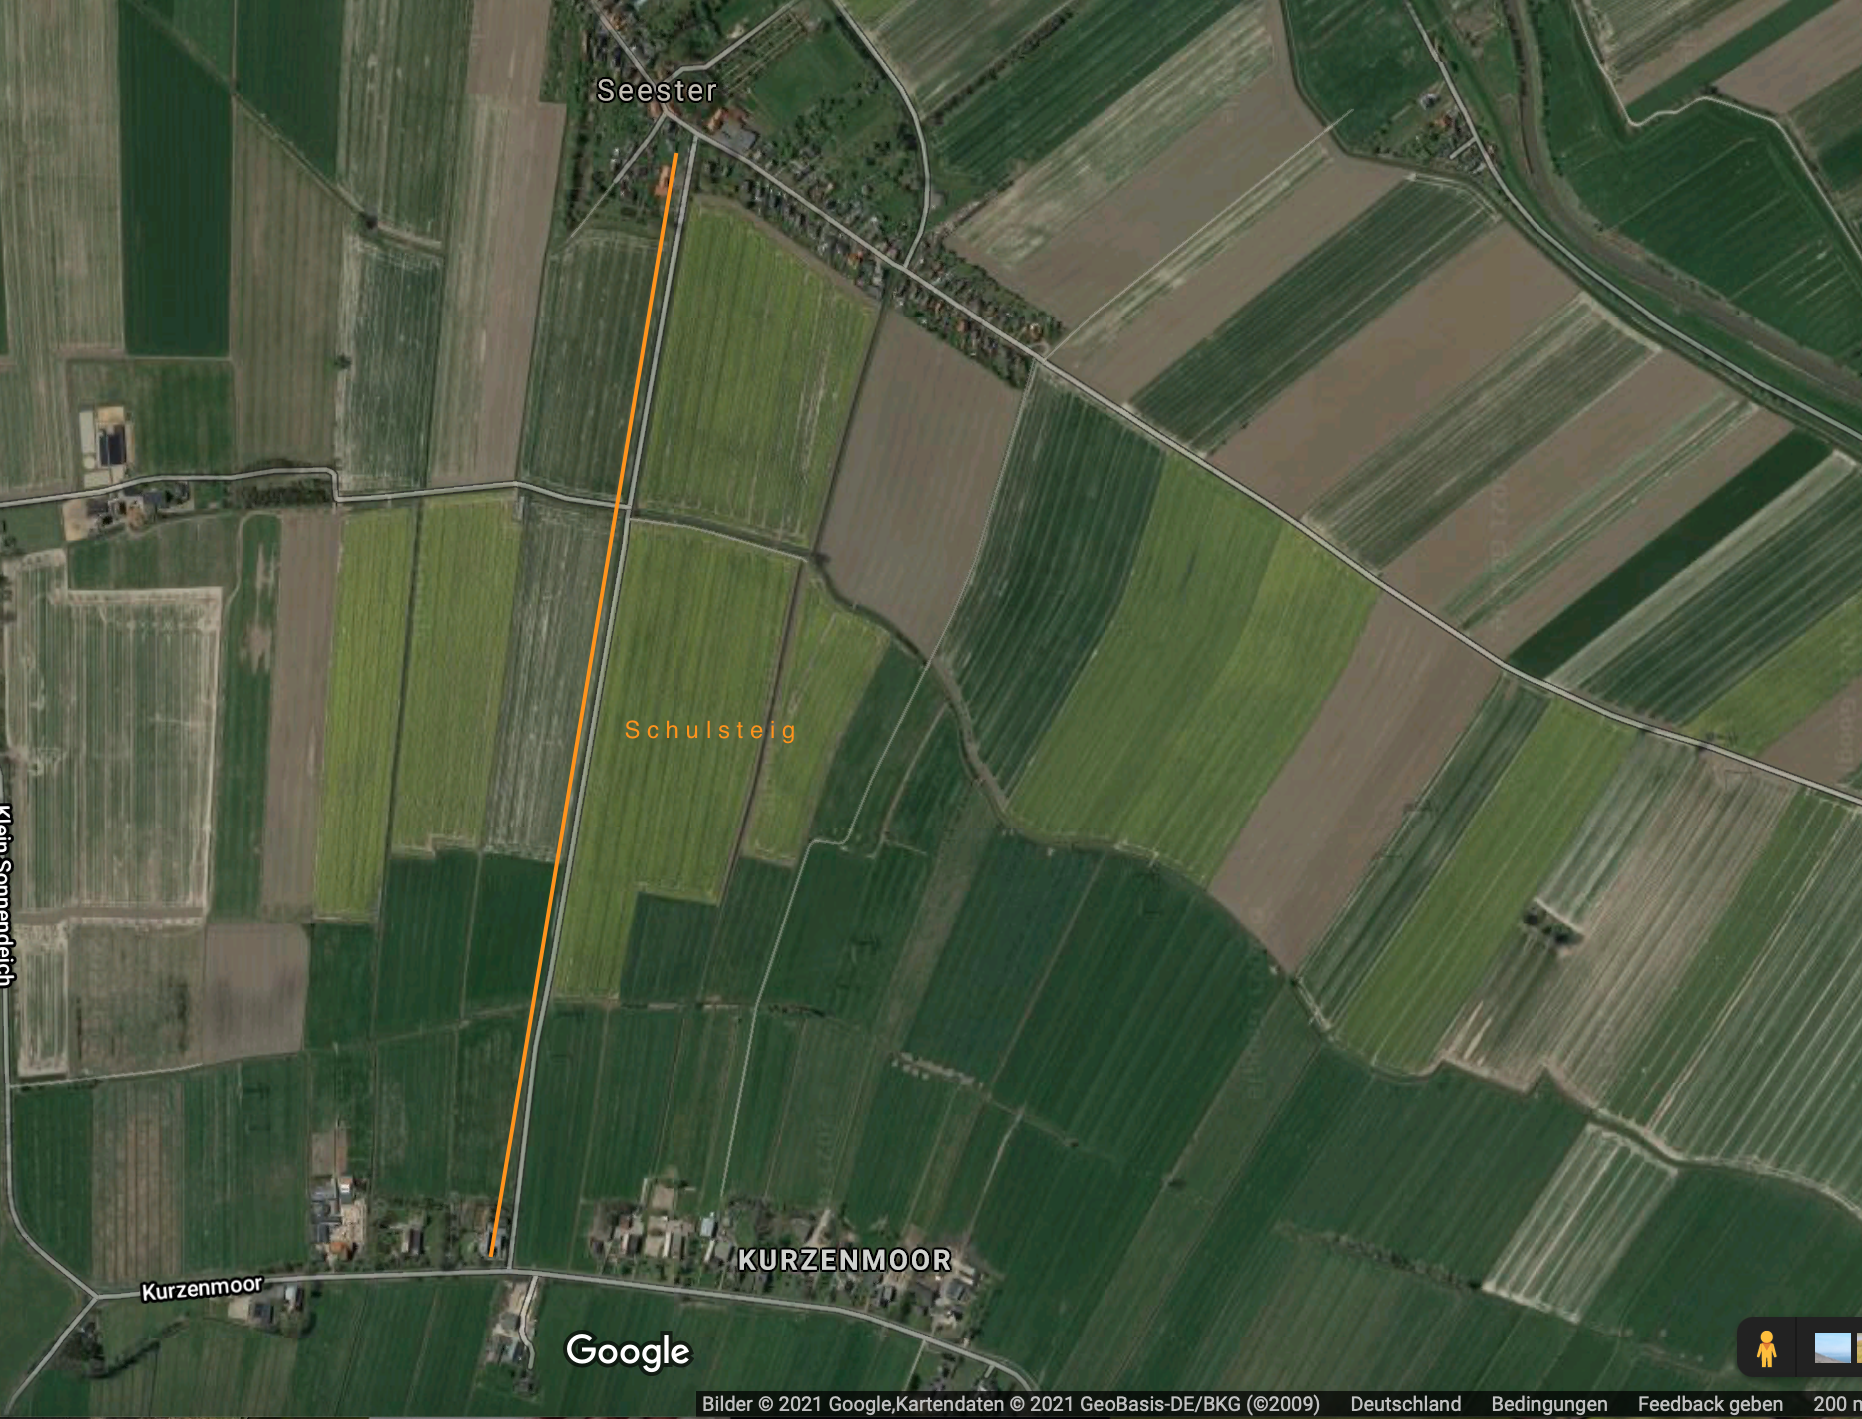 Quelle: www.google.de/maps in orange markiert der künftige Radweg